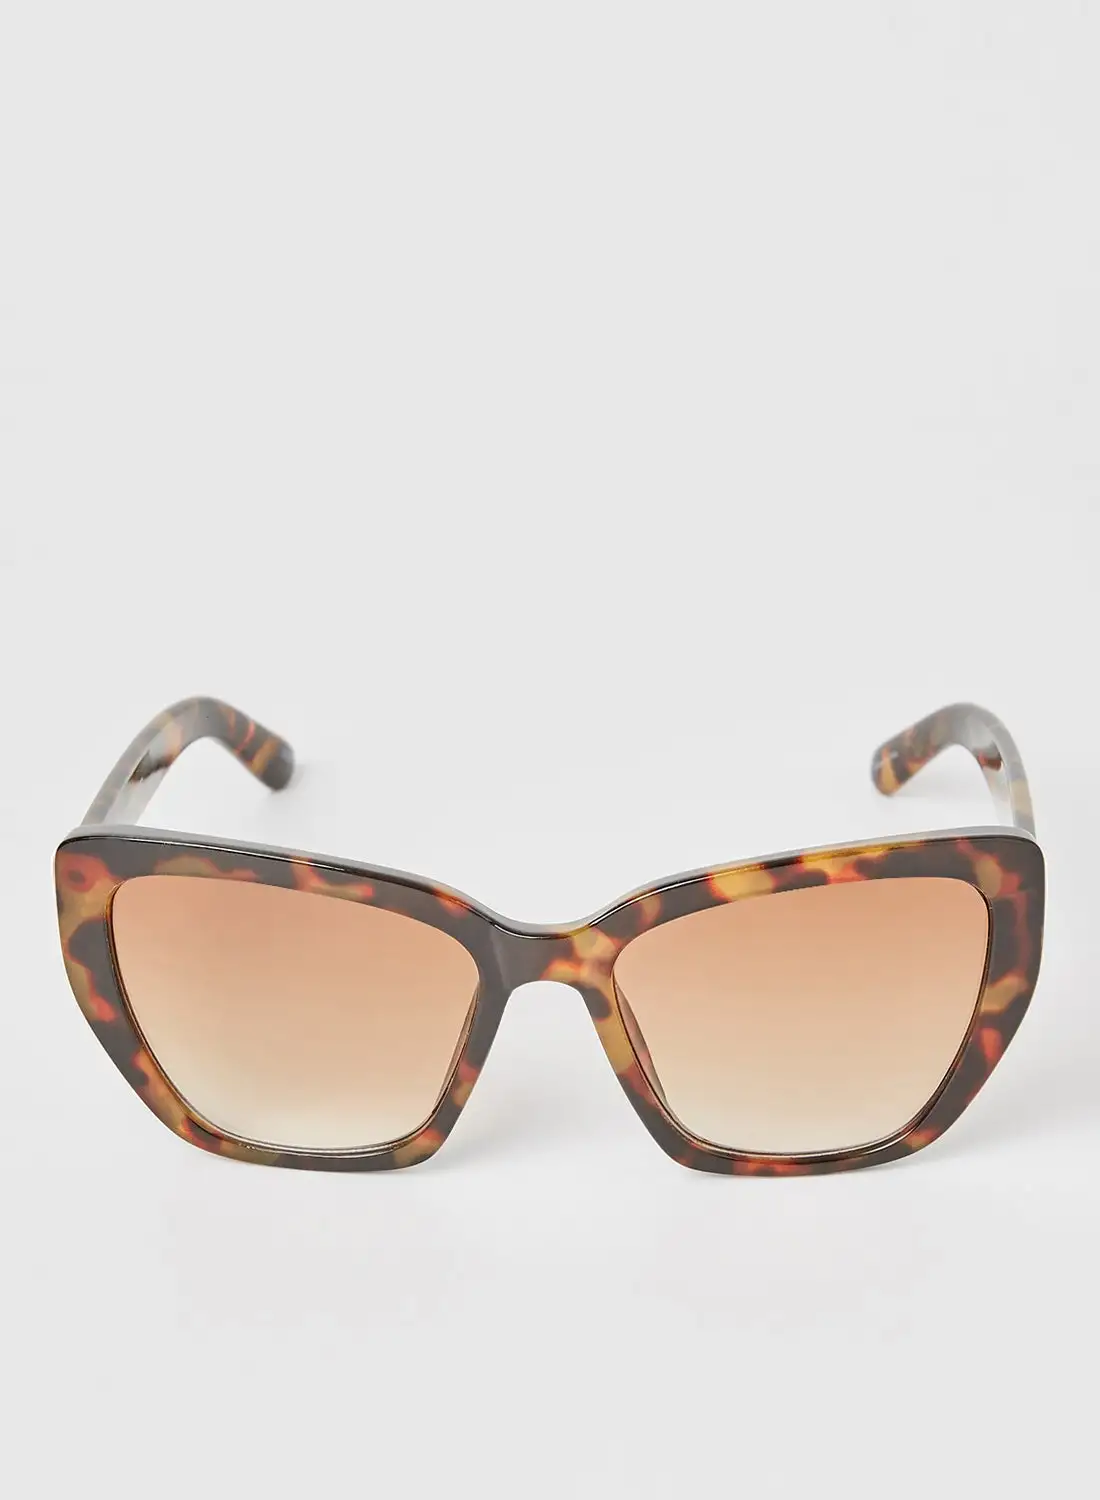 SELECTED FEMME Women's Classic Sunglasses